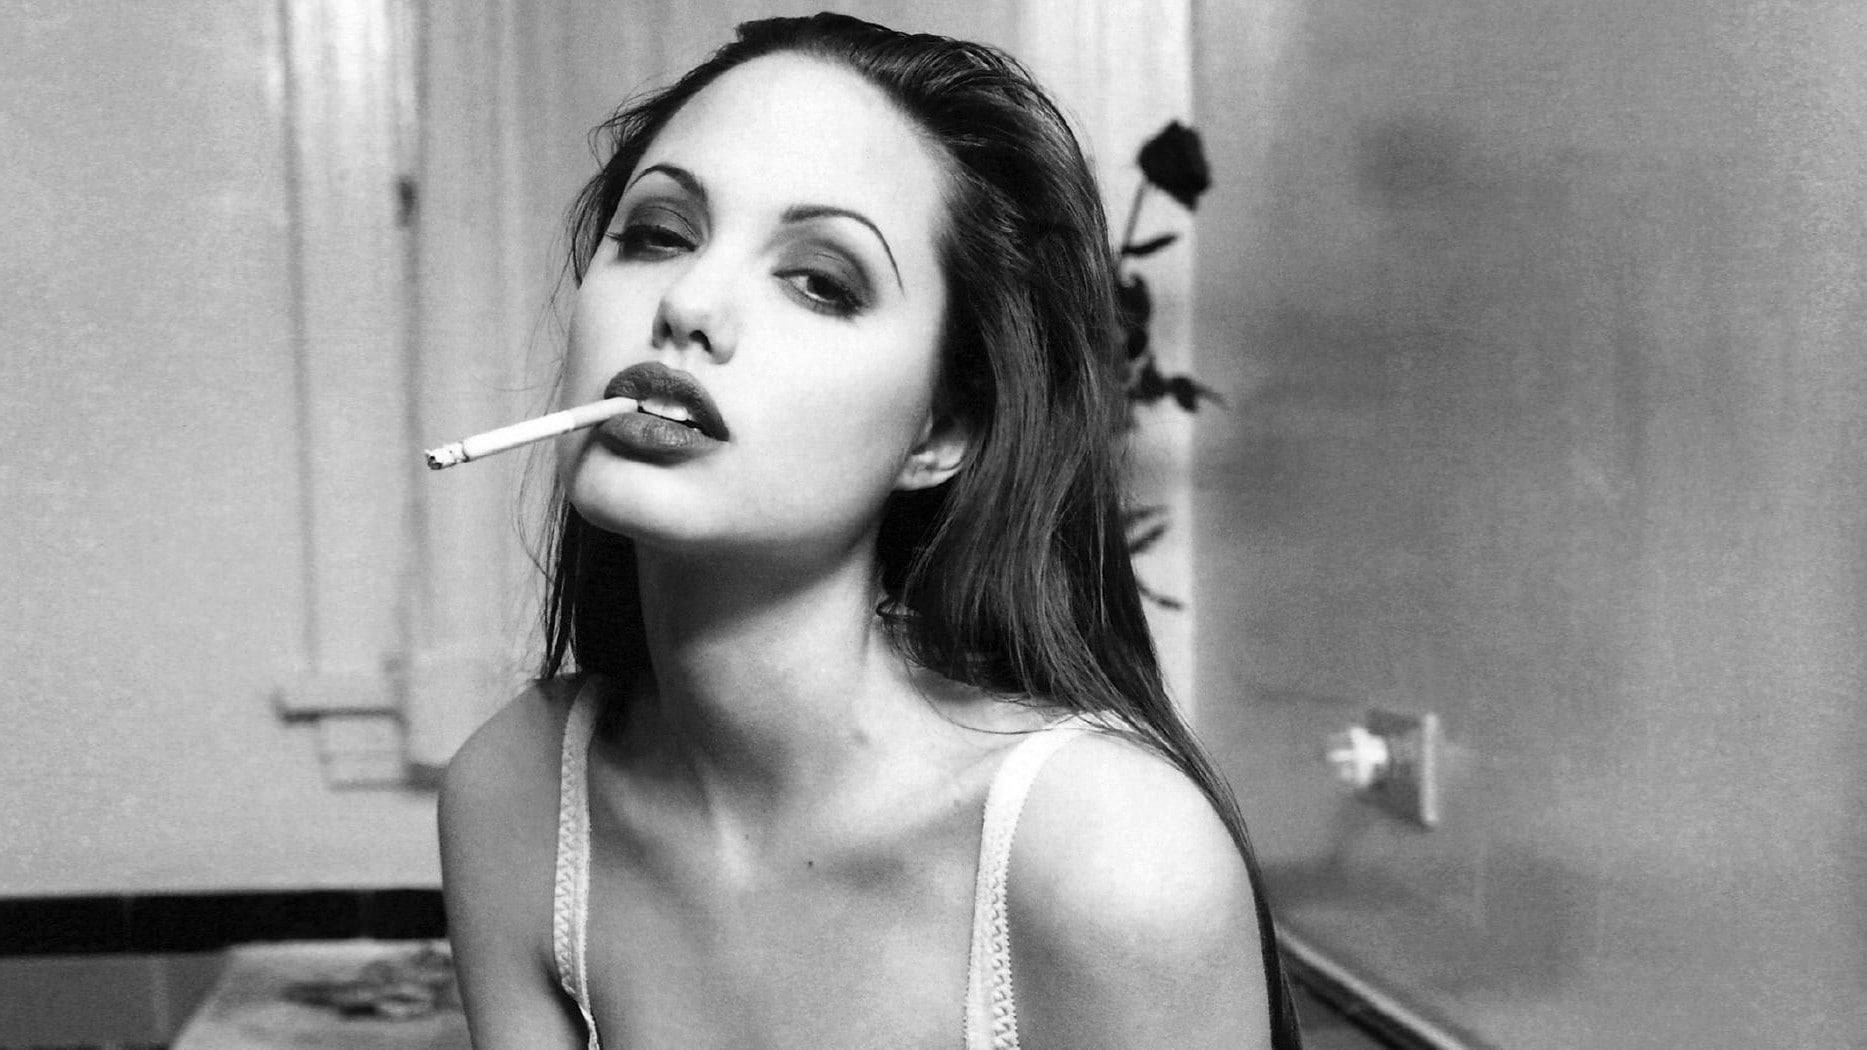 HD wallpaper: woman smoking cigarette, Angelina Jolie, actress